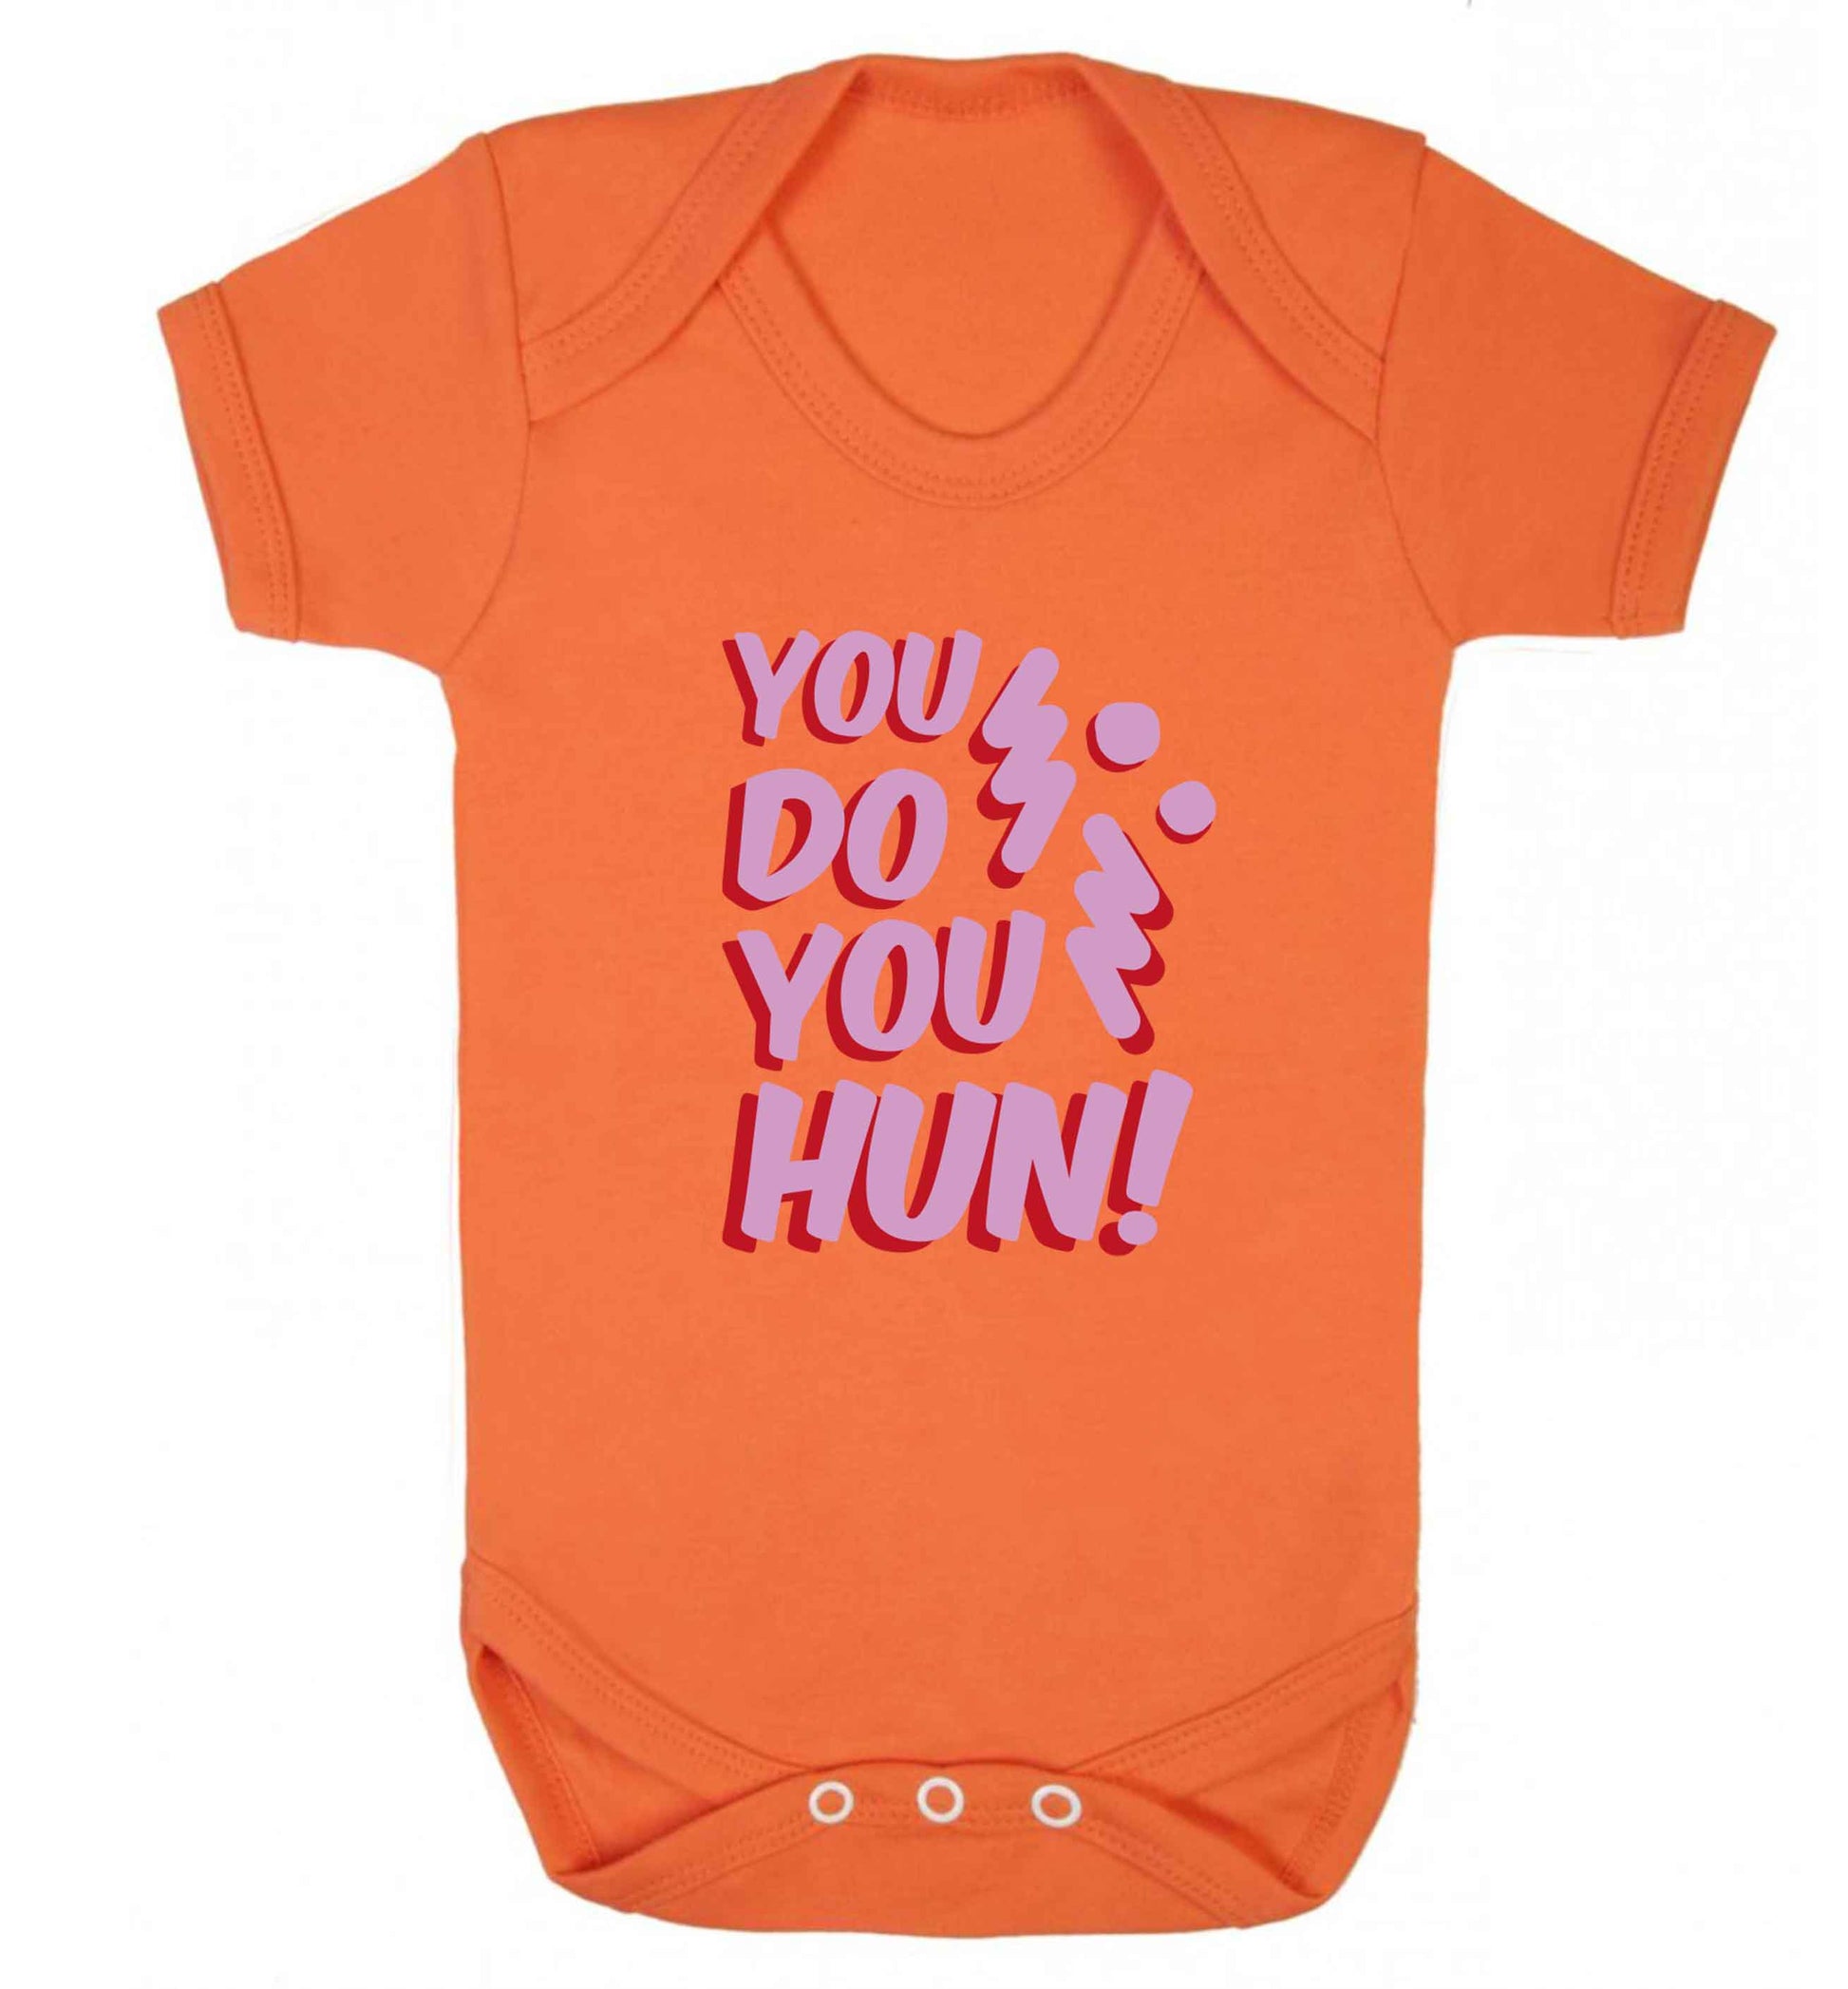 You do you hun baby vest orange 18-24 months